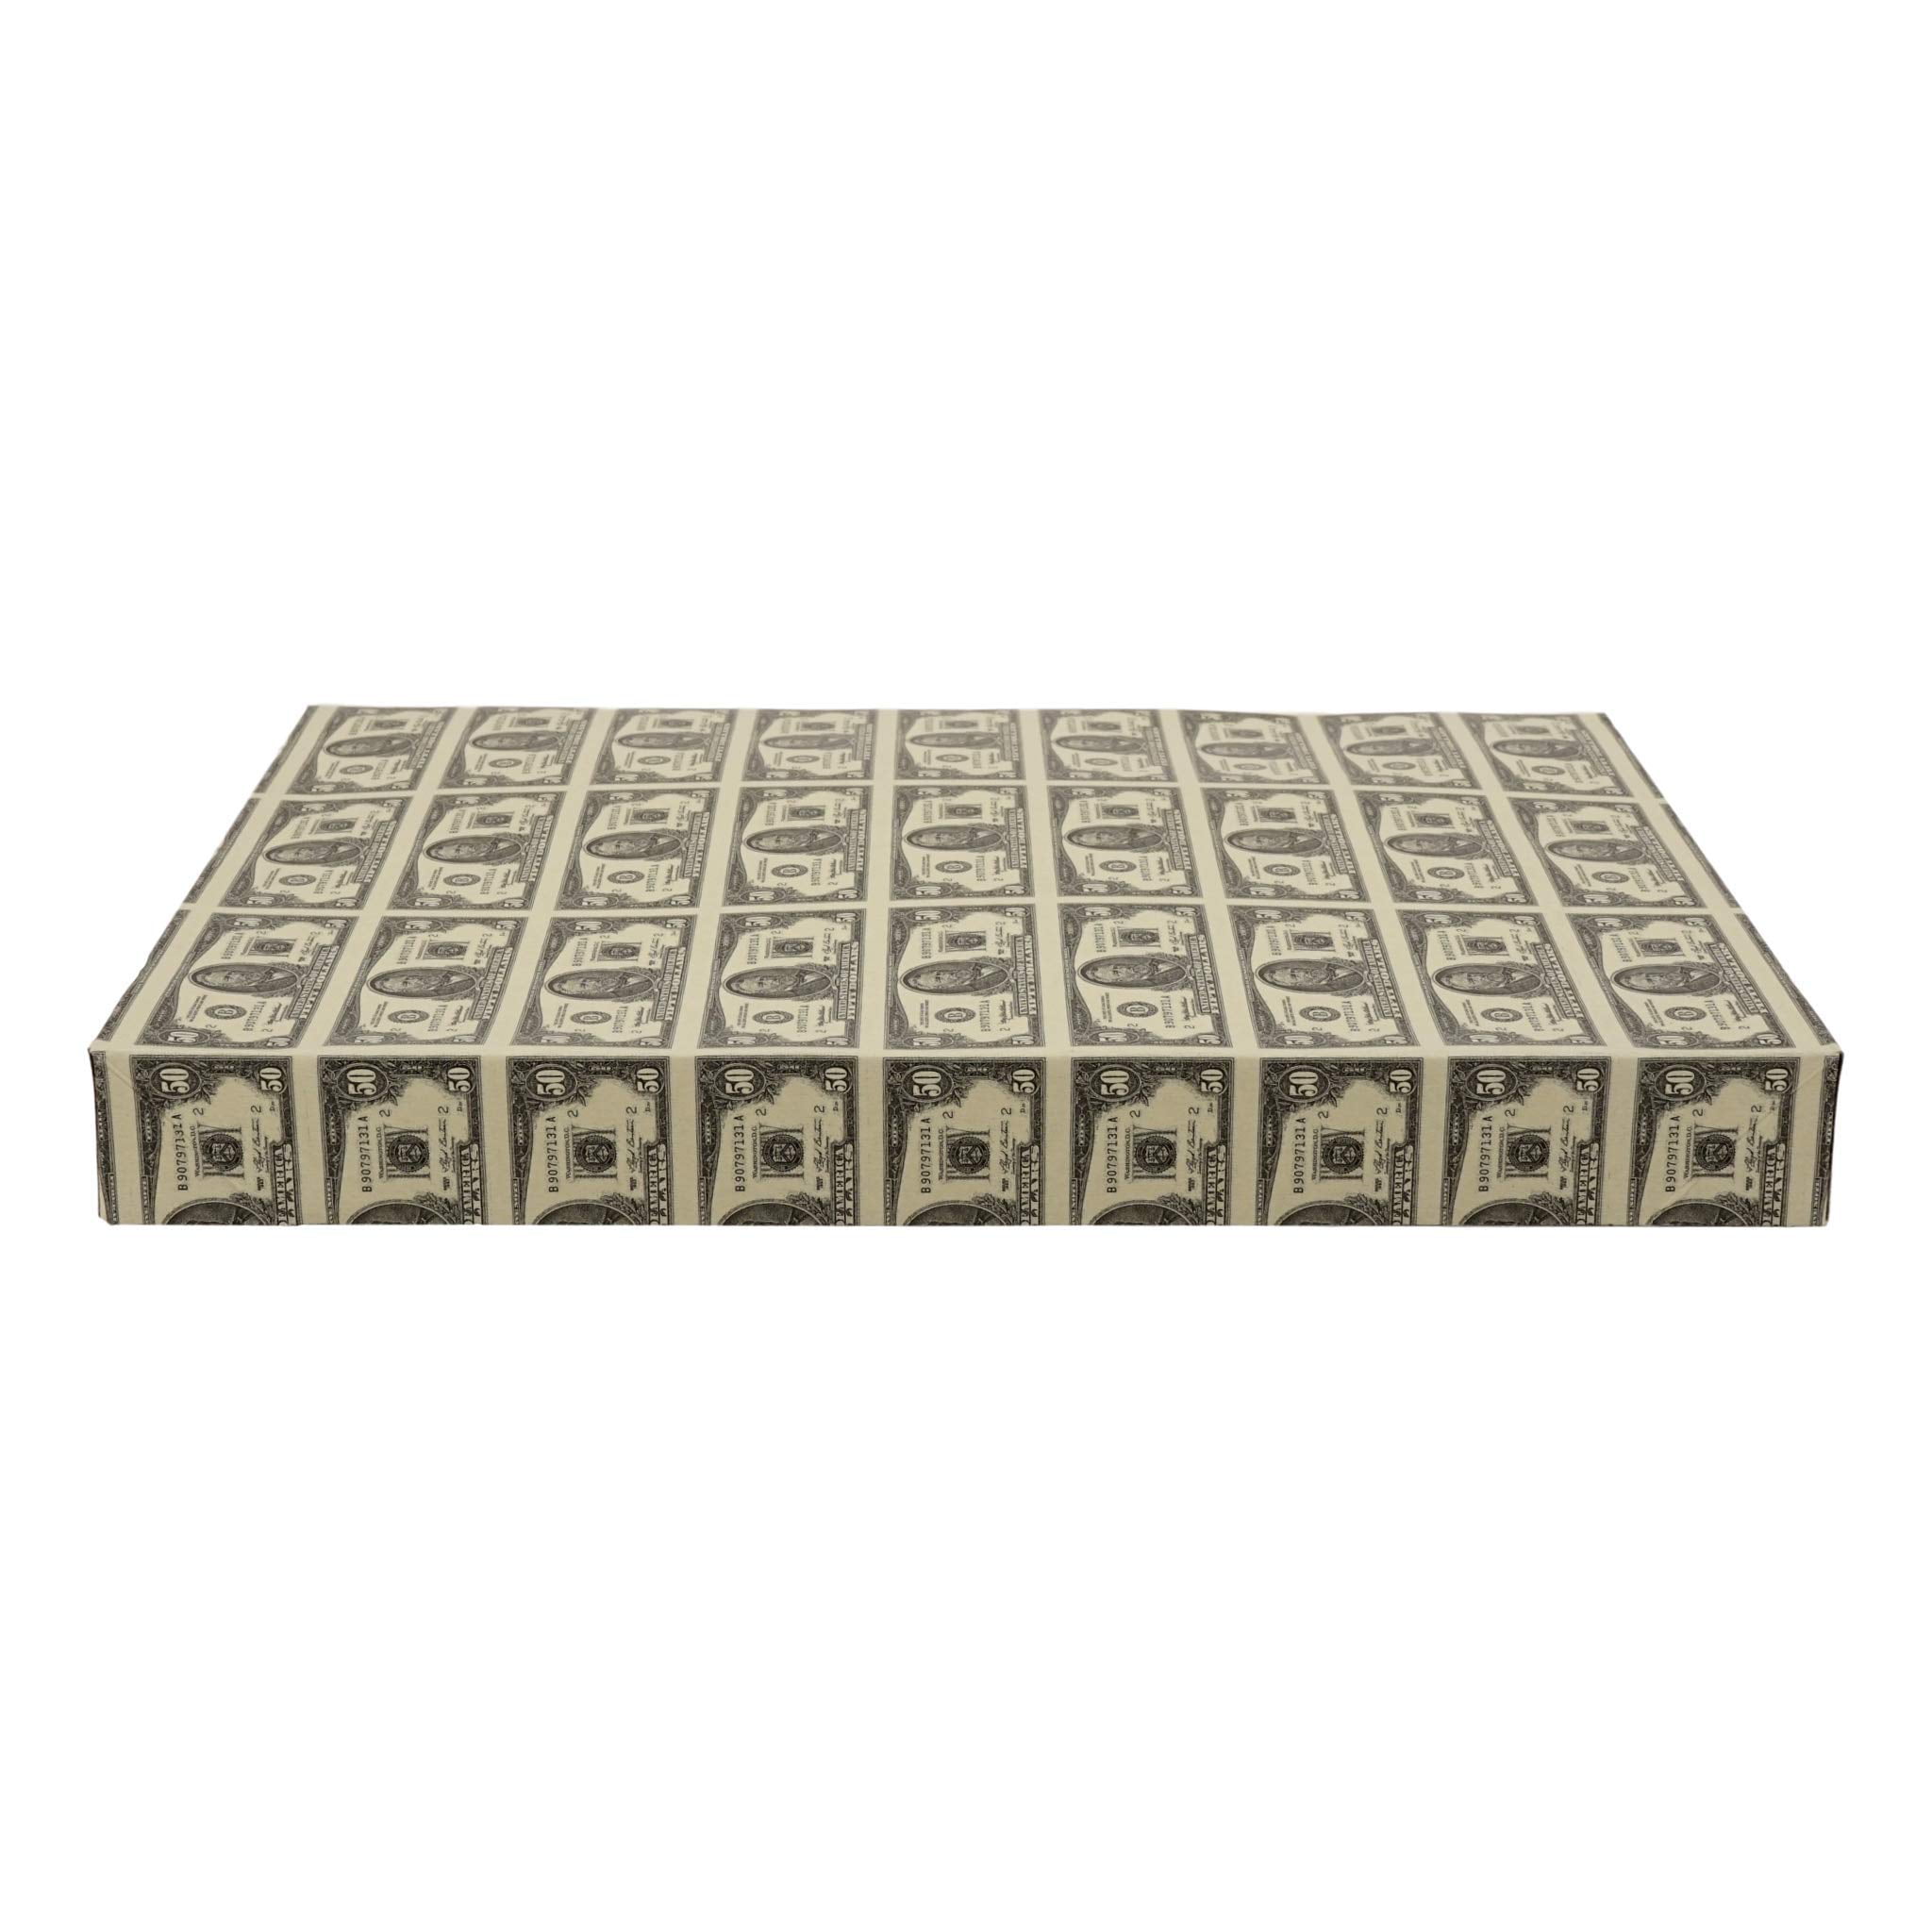 Gift Shirt Boxes (8 Pack, 10.5 x 7.8 x 1.25 in) Dollar Bill Design, Money  Print 